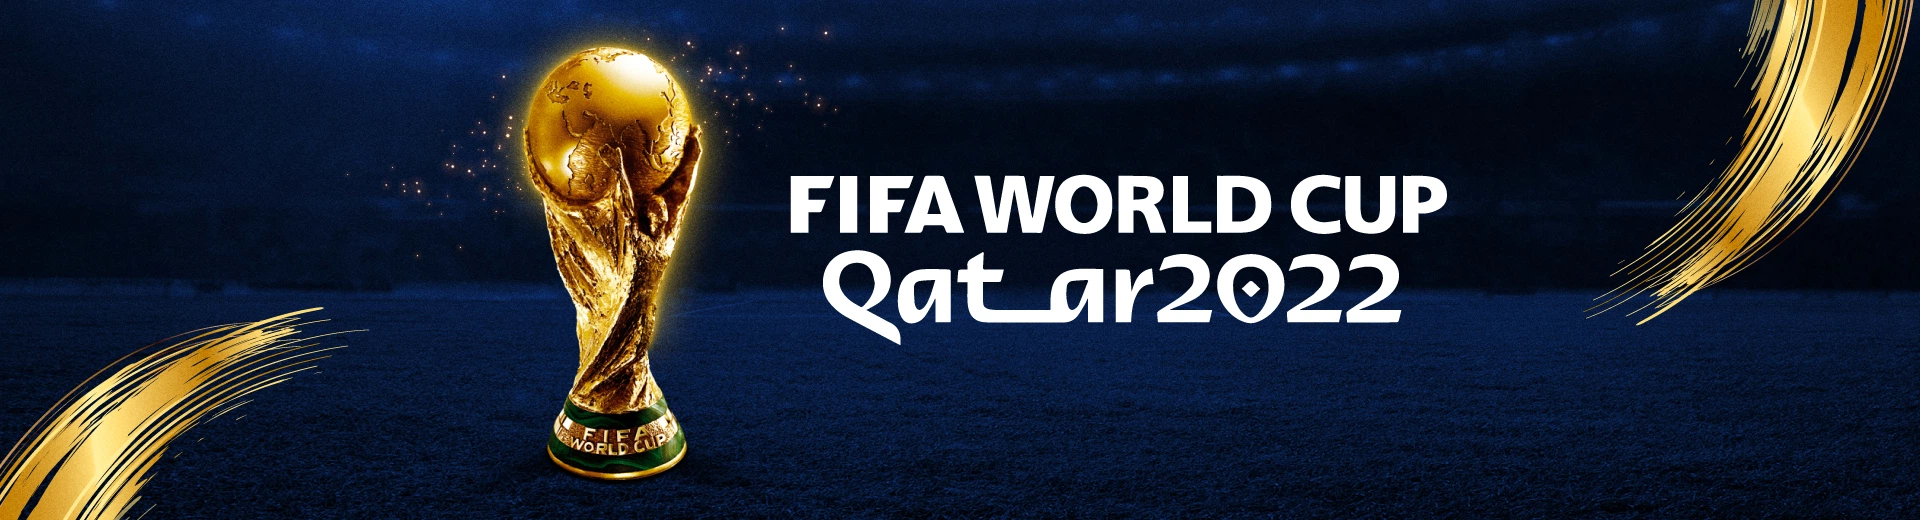 FIFA World Cup 2022 for Qatar Tournament in OKBET Review - OKBET live football